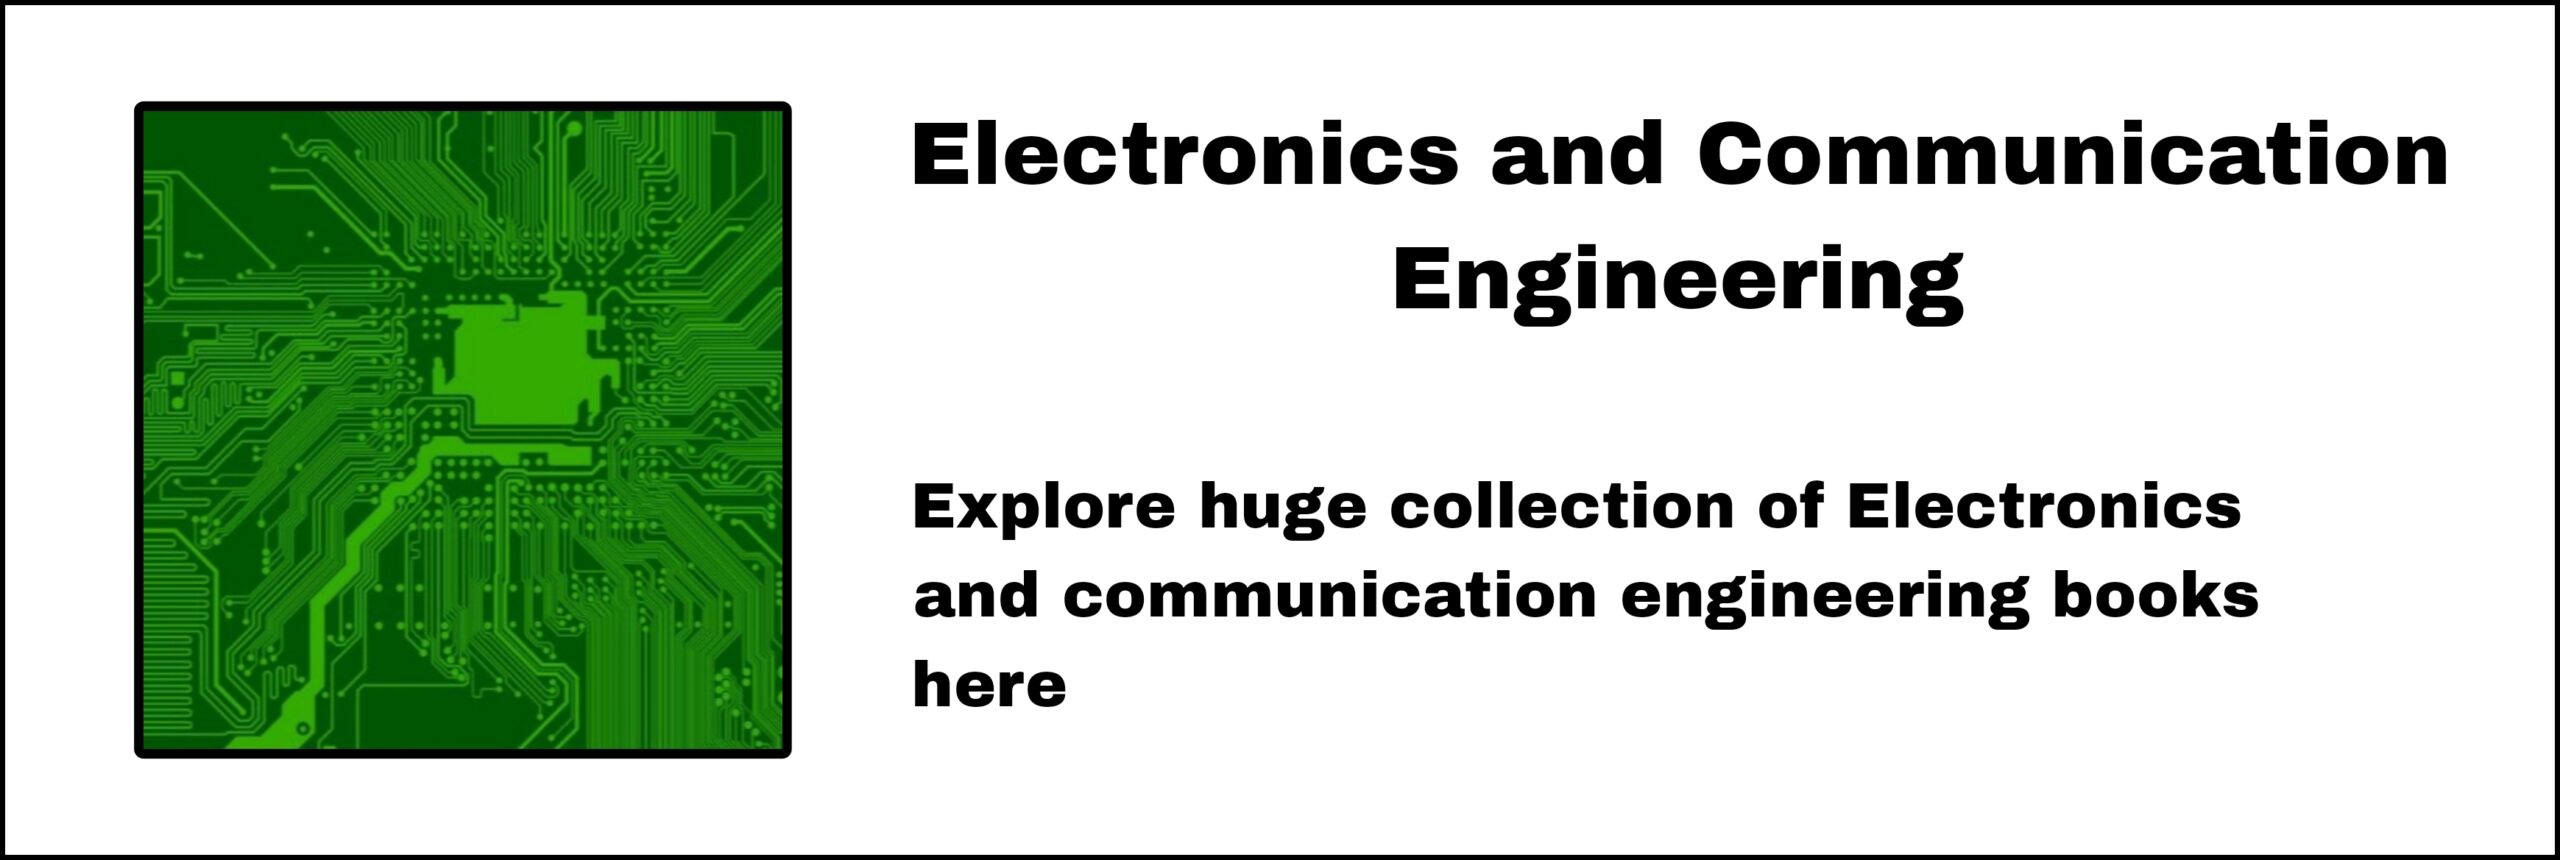 ELECTRONICS AND COMMUNICATION ENGINEERING